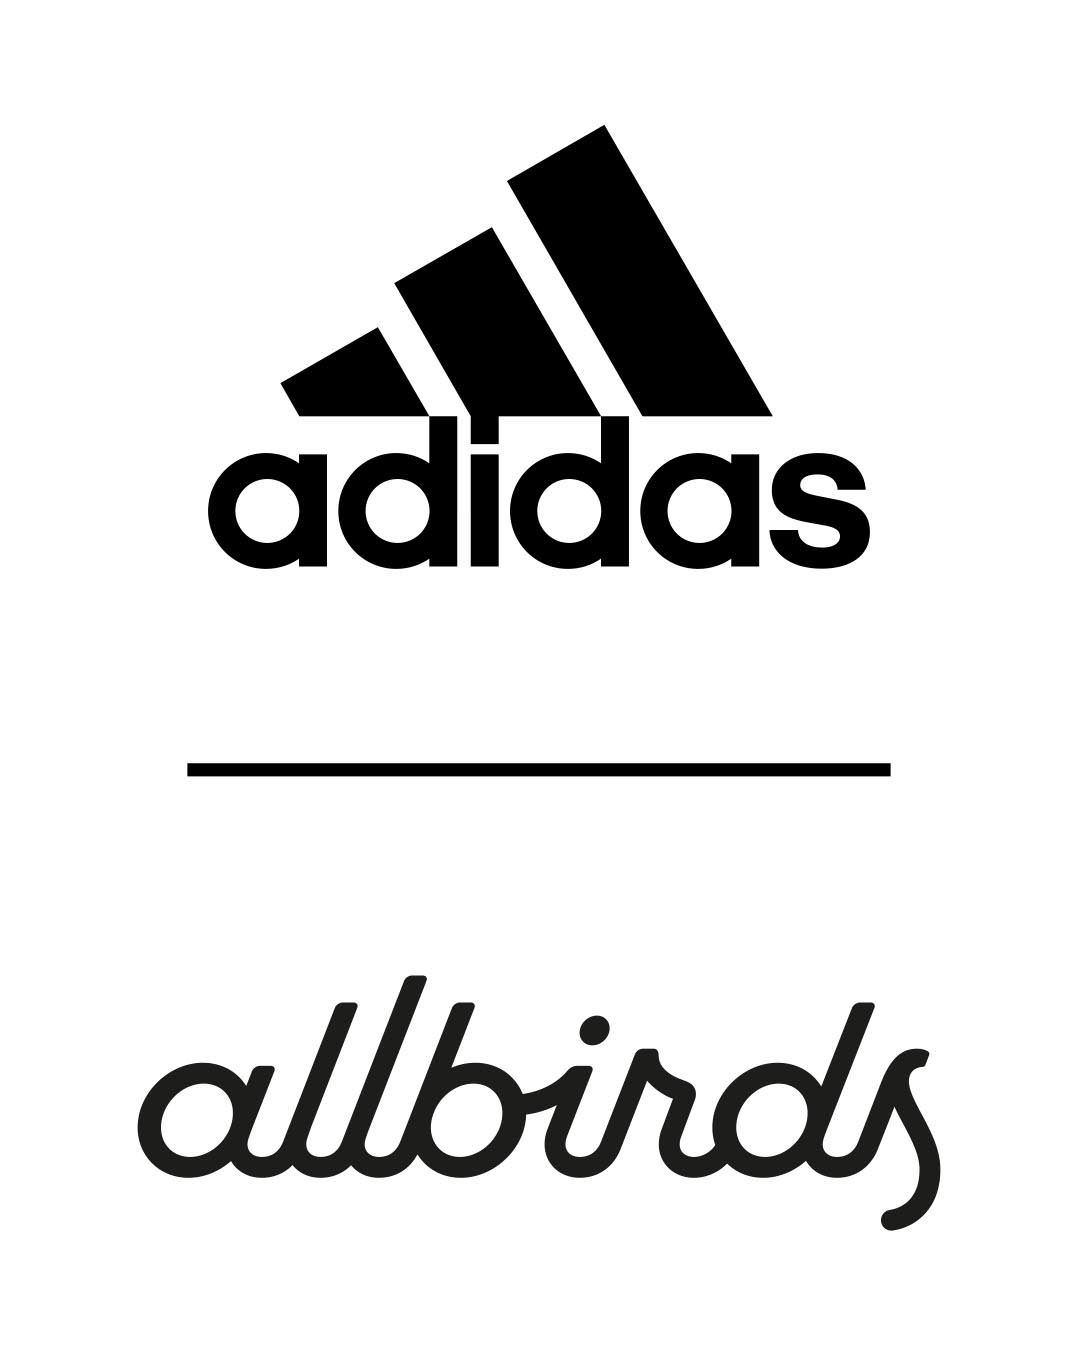 adidas allbirds collab